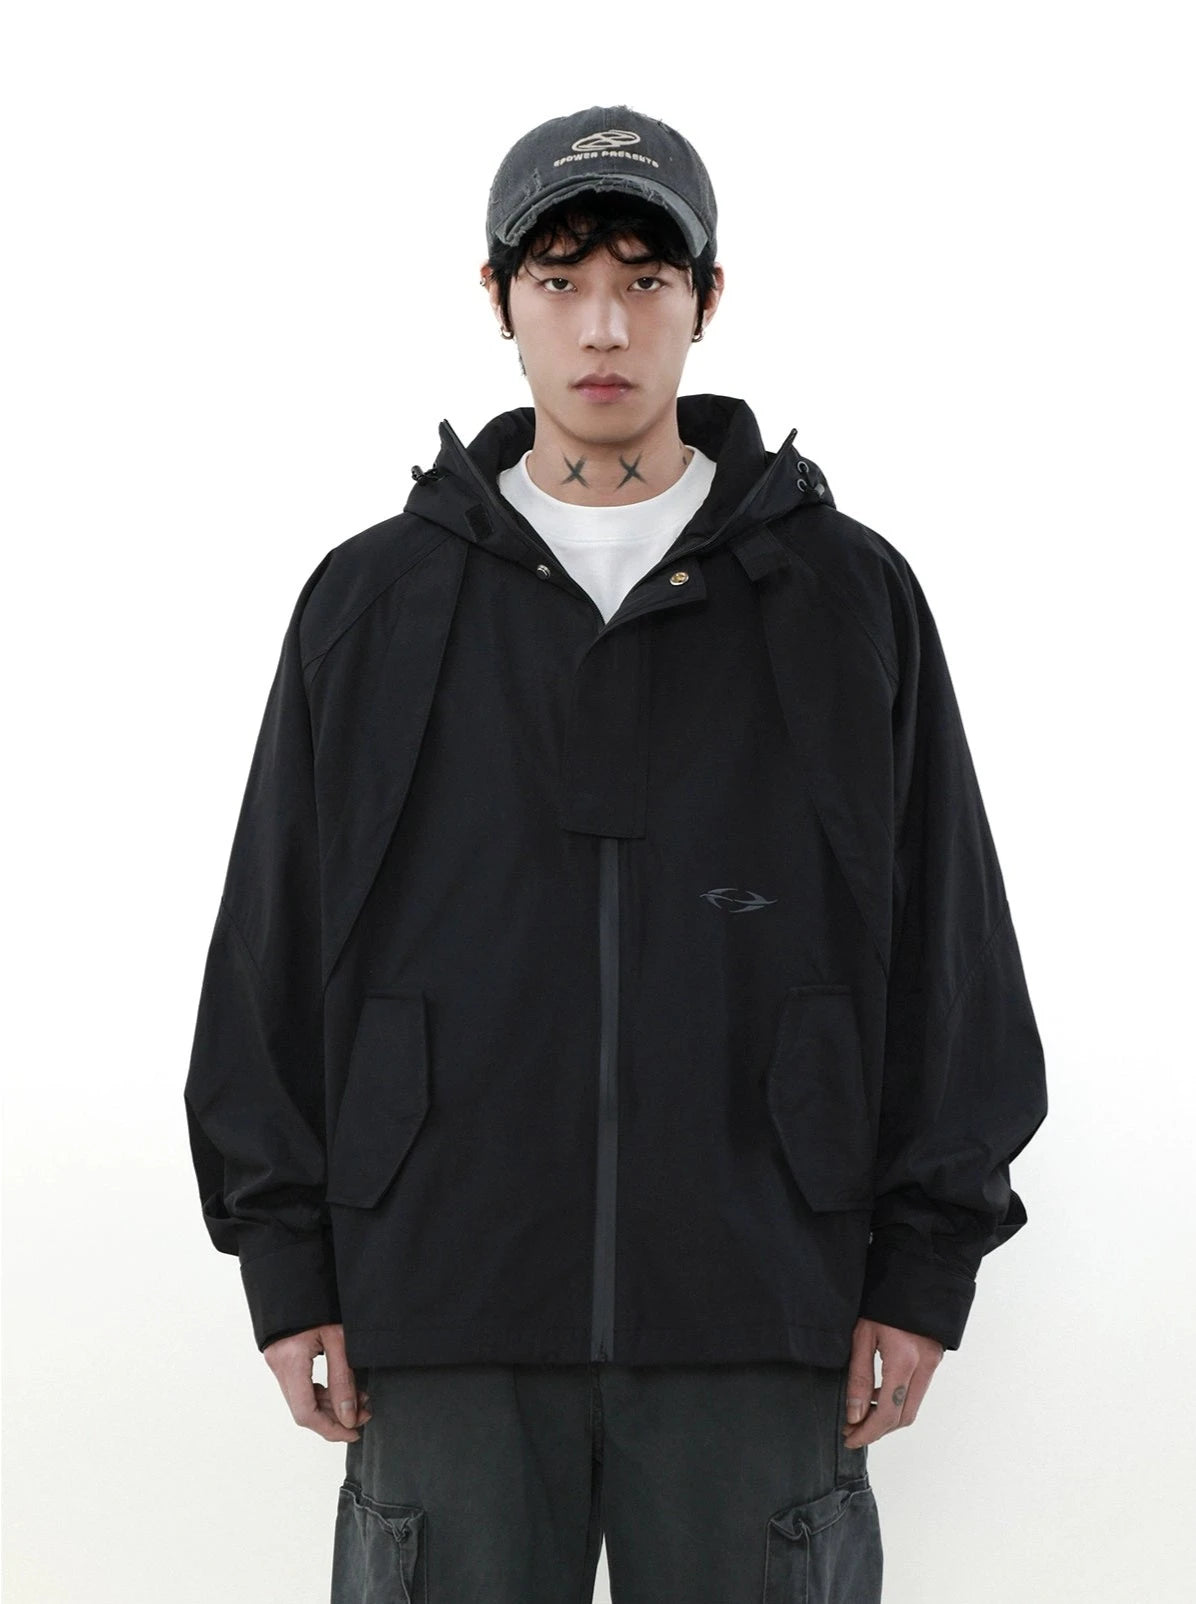 Boxy Cut Windbreaker Jacket Korean Street Fashion Jacket By Mr Nearly Shop Online at OH Vault